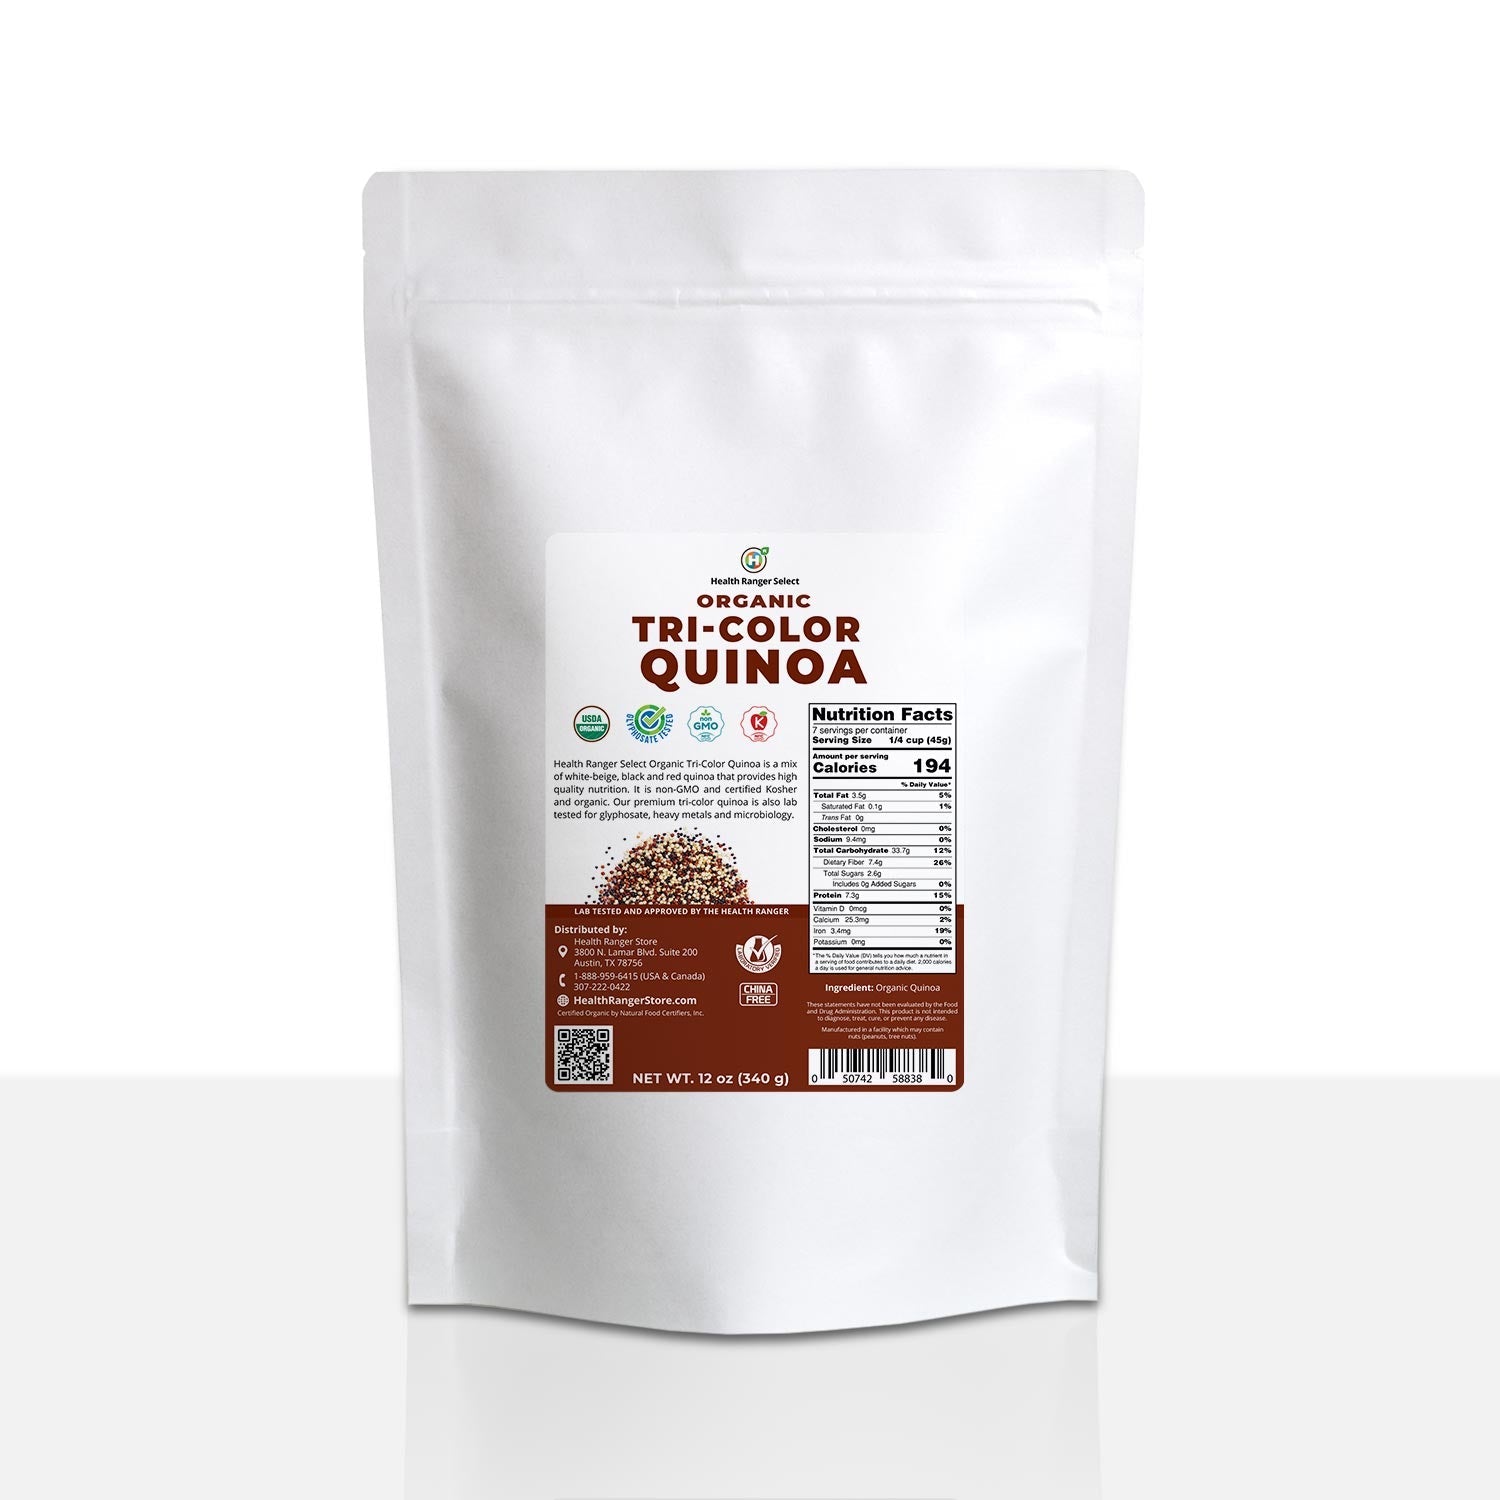 Organic Tri-color Quinoa 12oz (340g) (6-Pack)